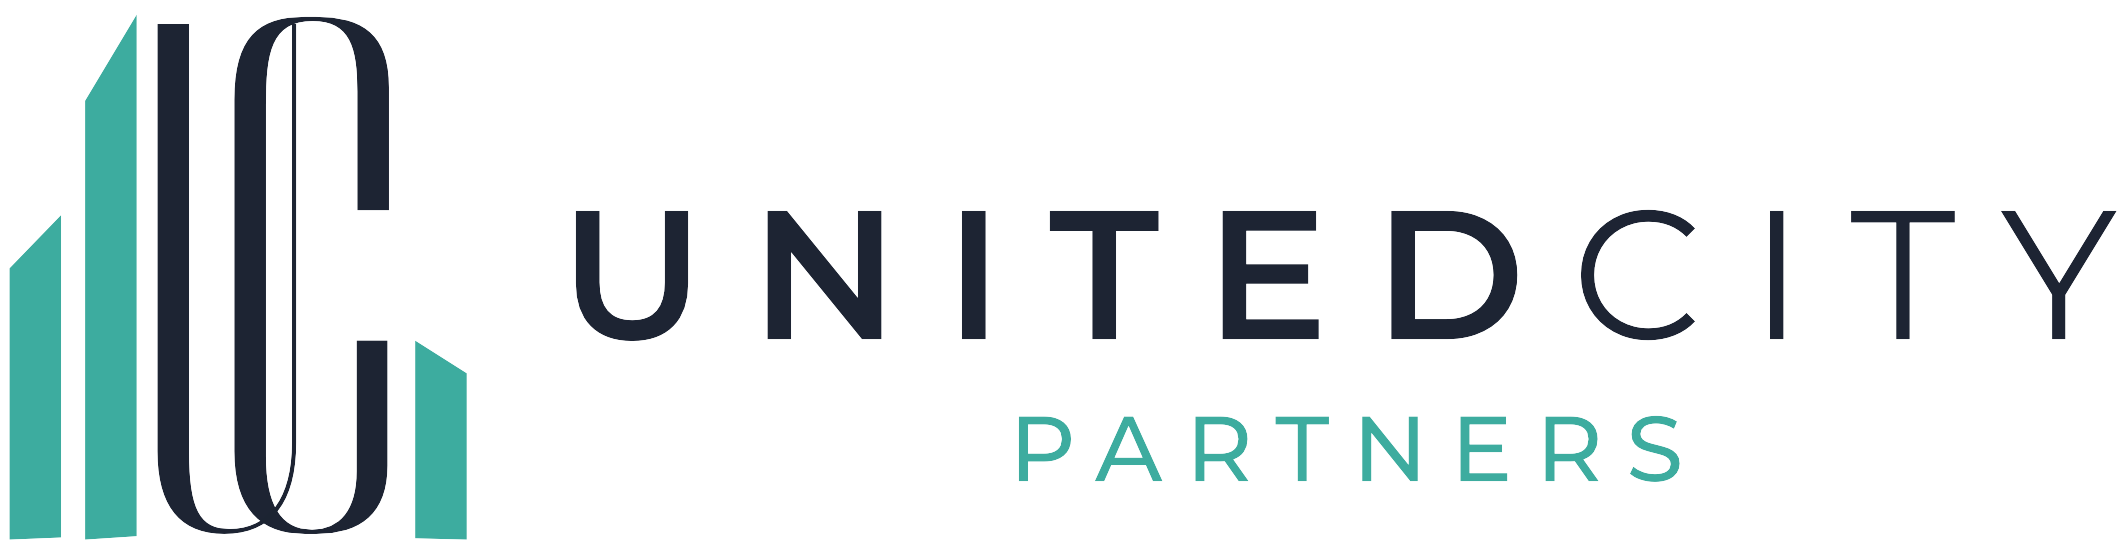 United City Partners